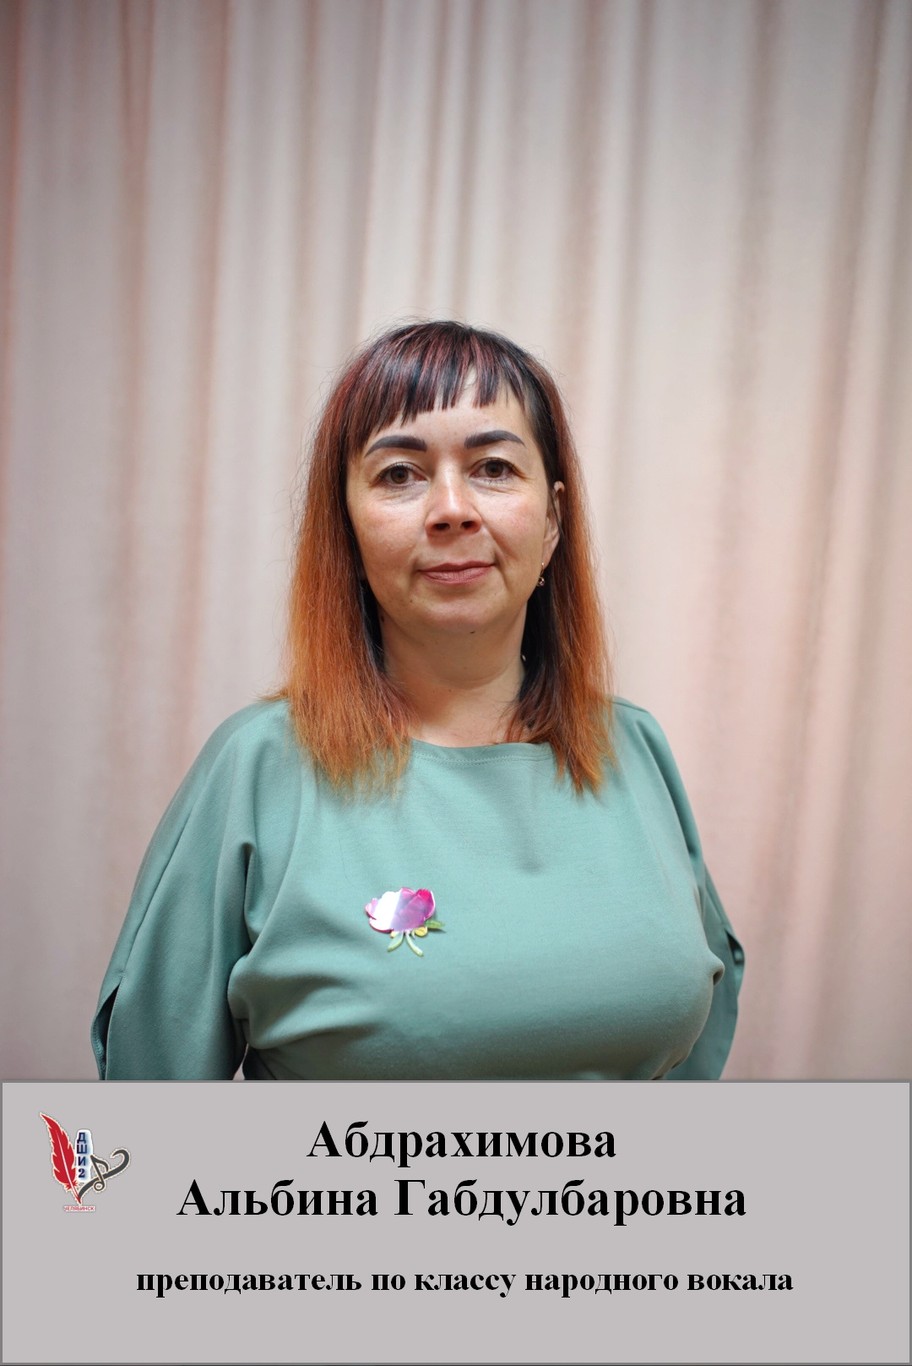 Абдрахимова Альбина Габдулбаровна